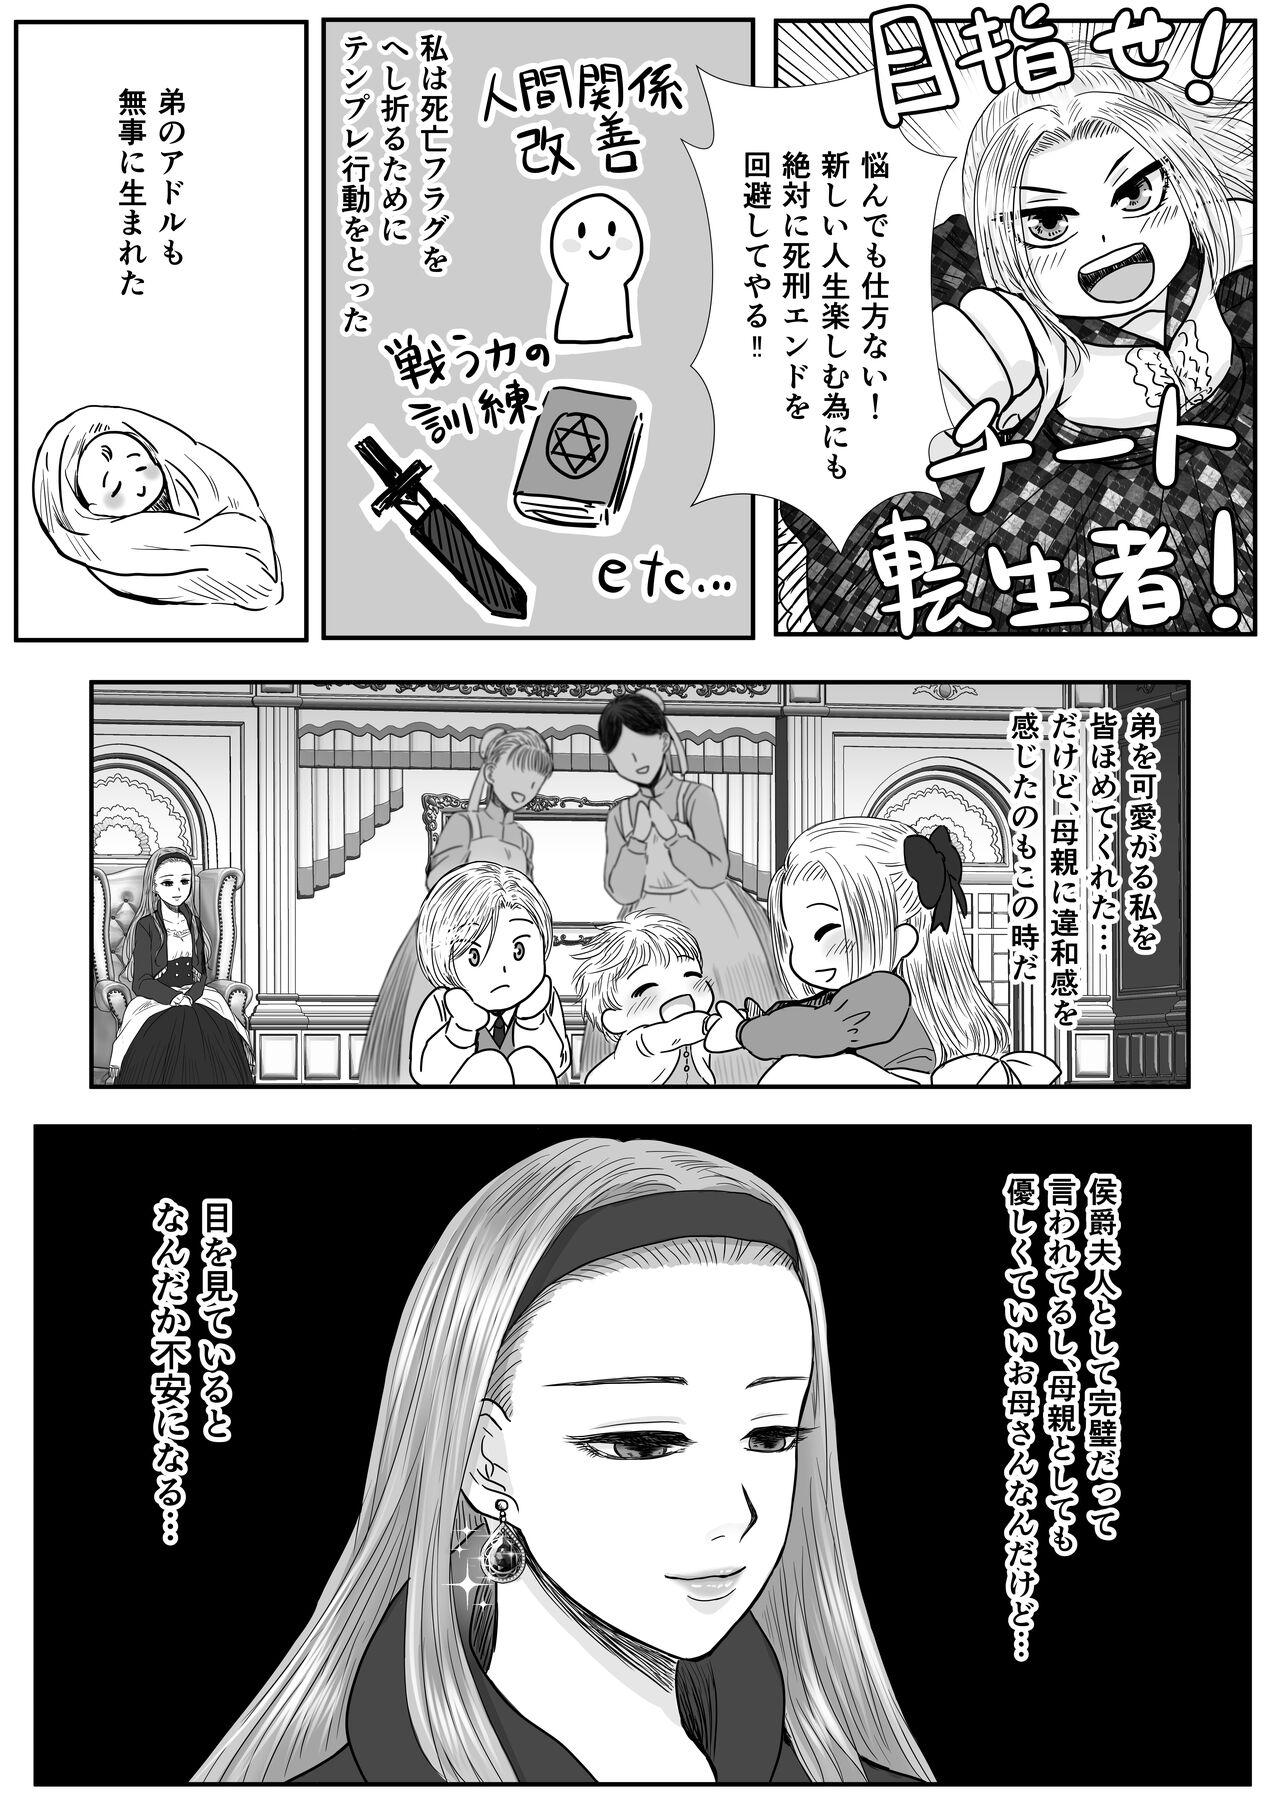 Curious Kyō ai no kusari - Original Teenpussy - Page 6